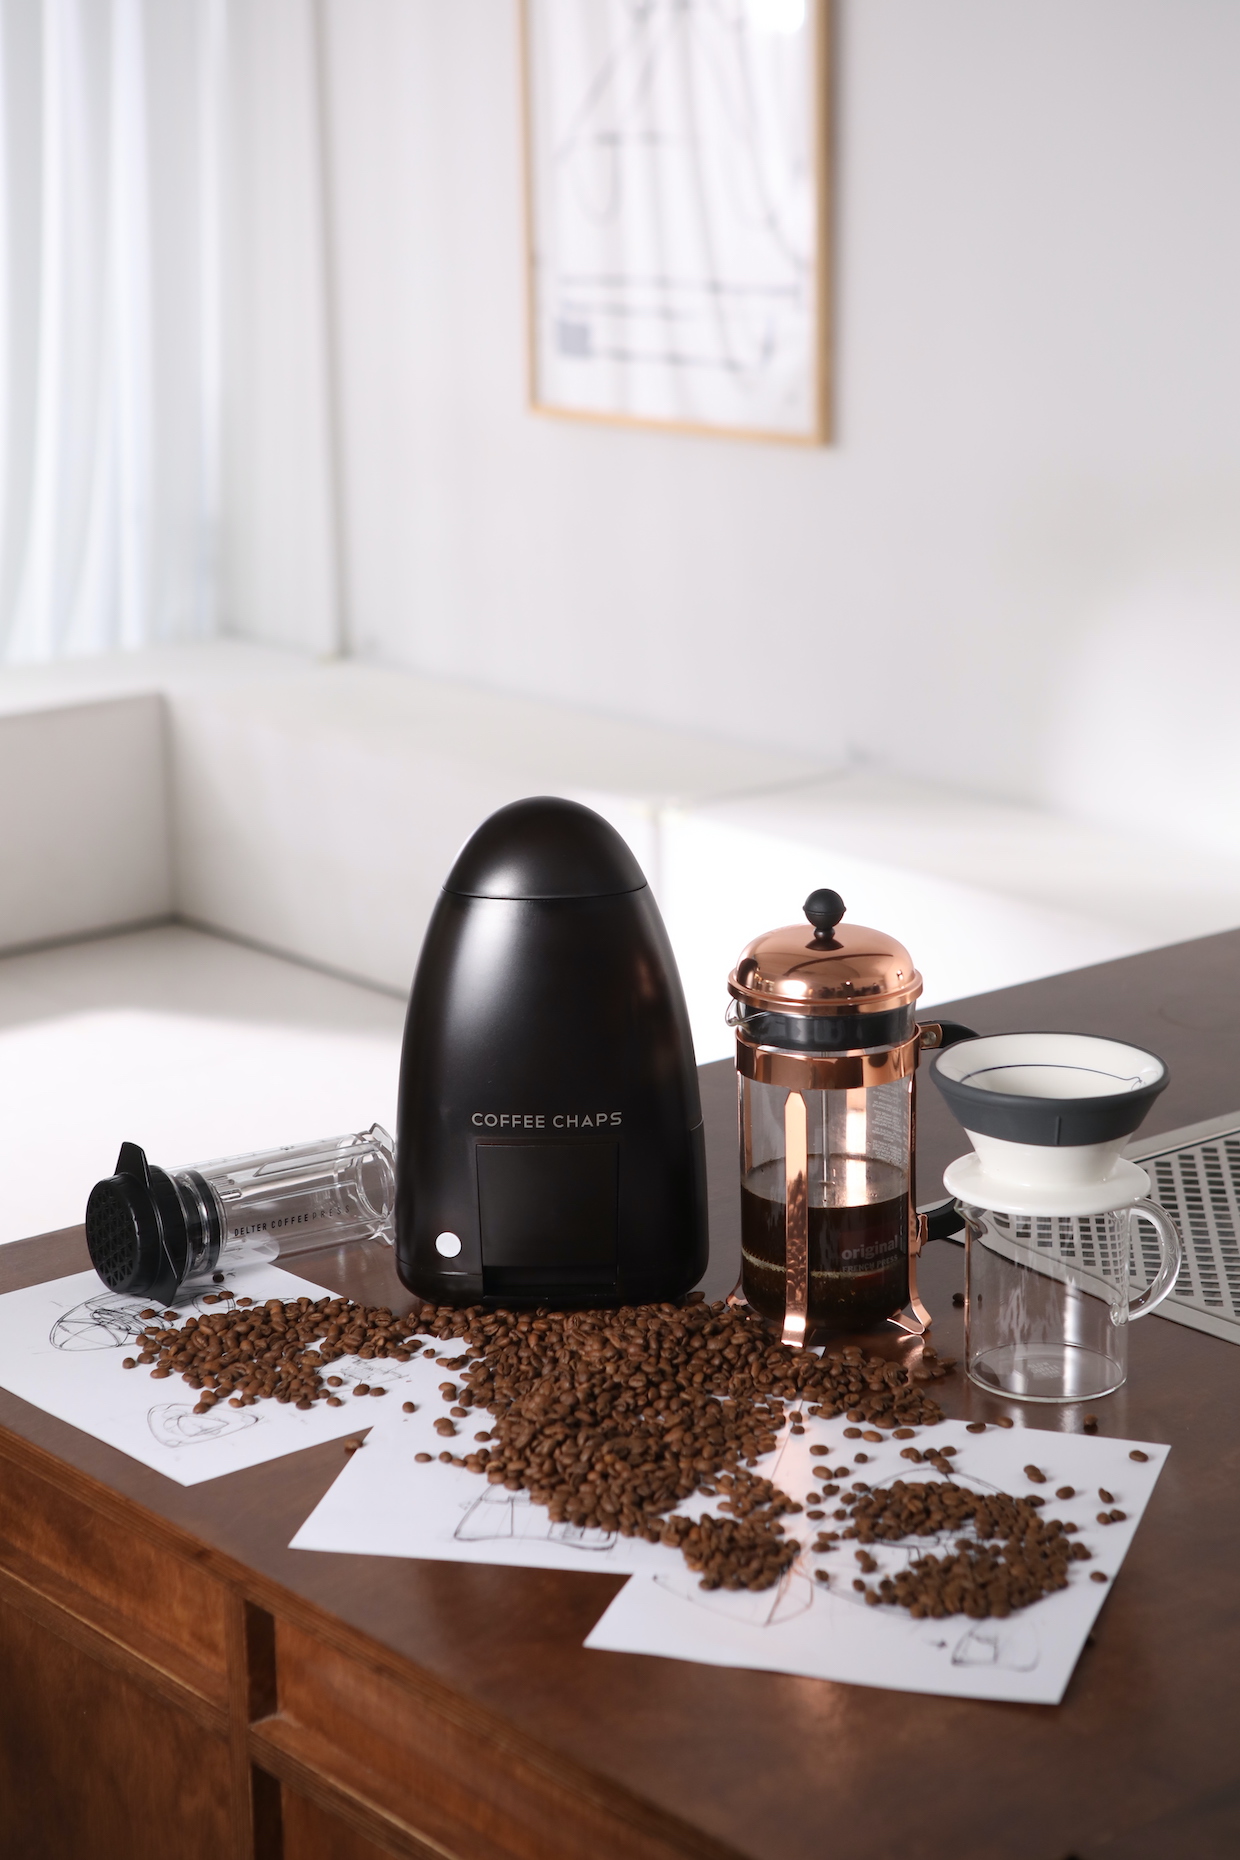 Airmill coffee grinder